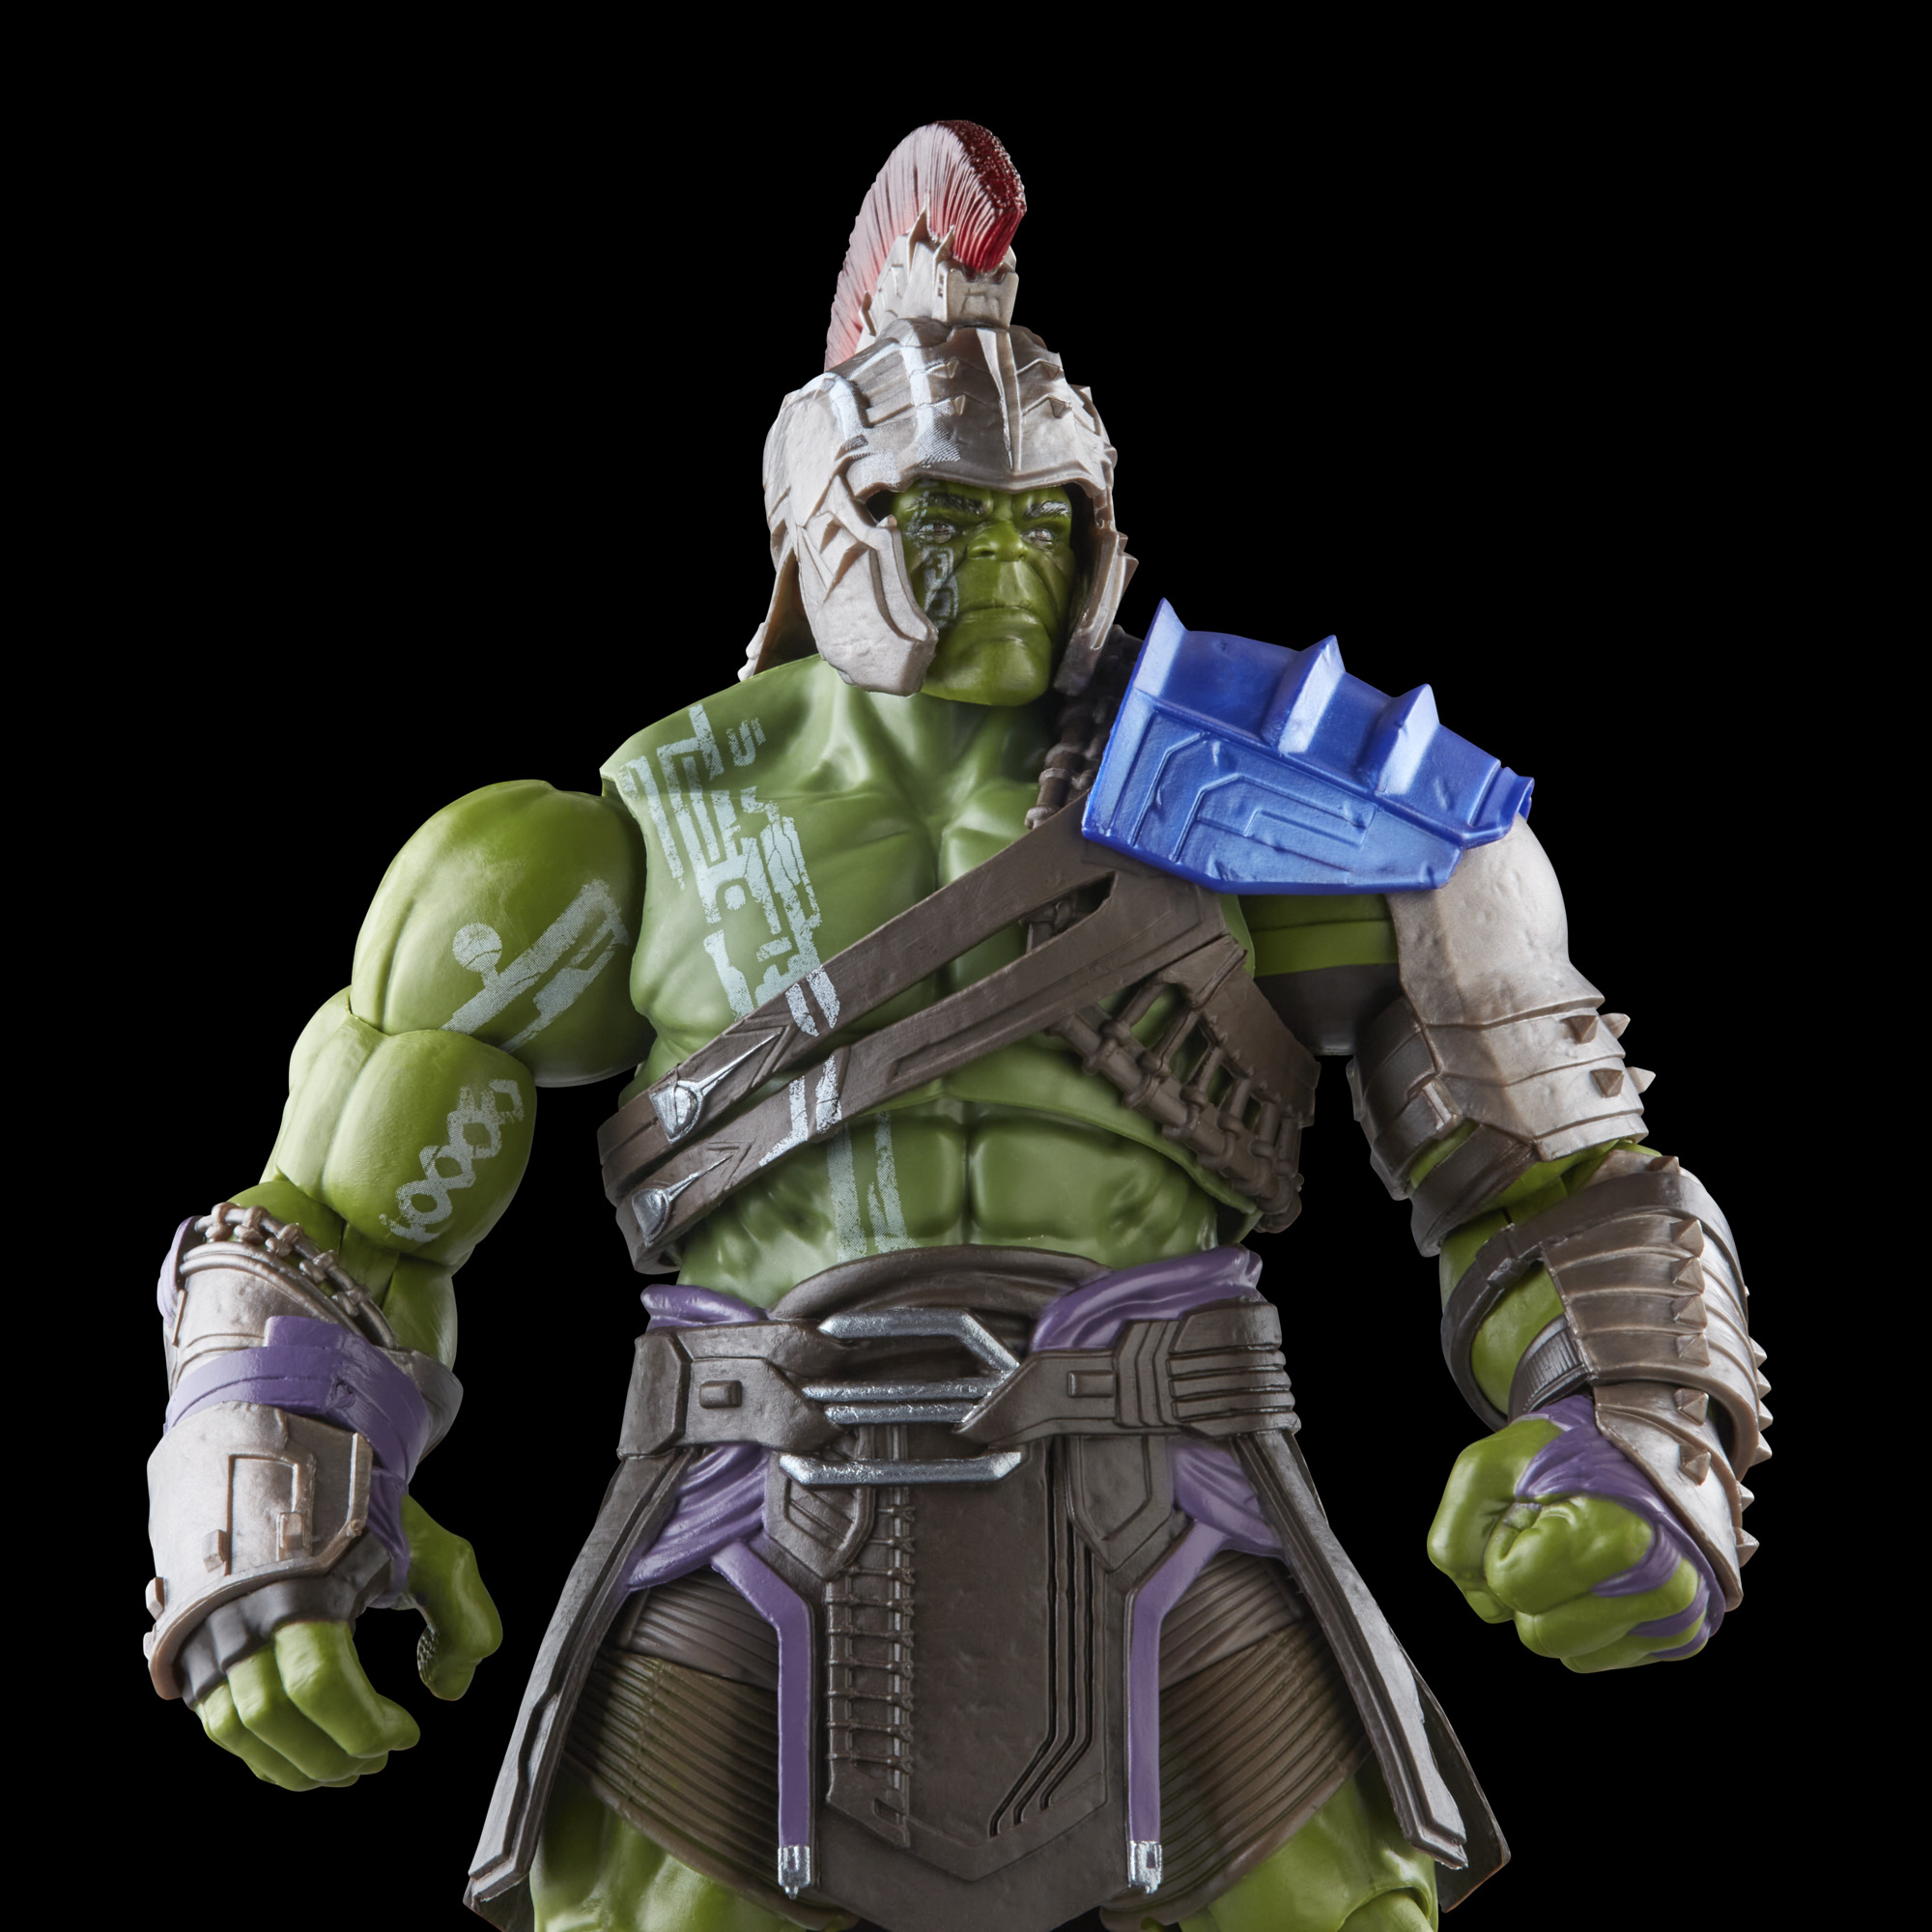 Marvel Legends: MCU Gladiator Hulk revealed